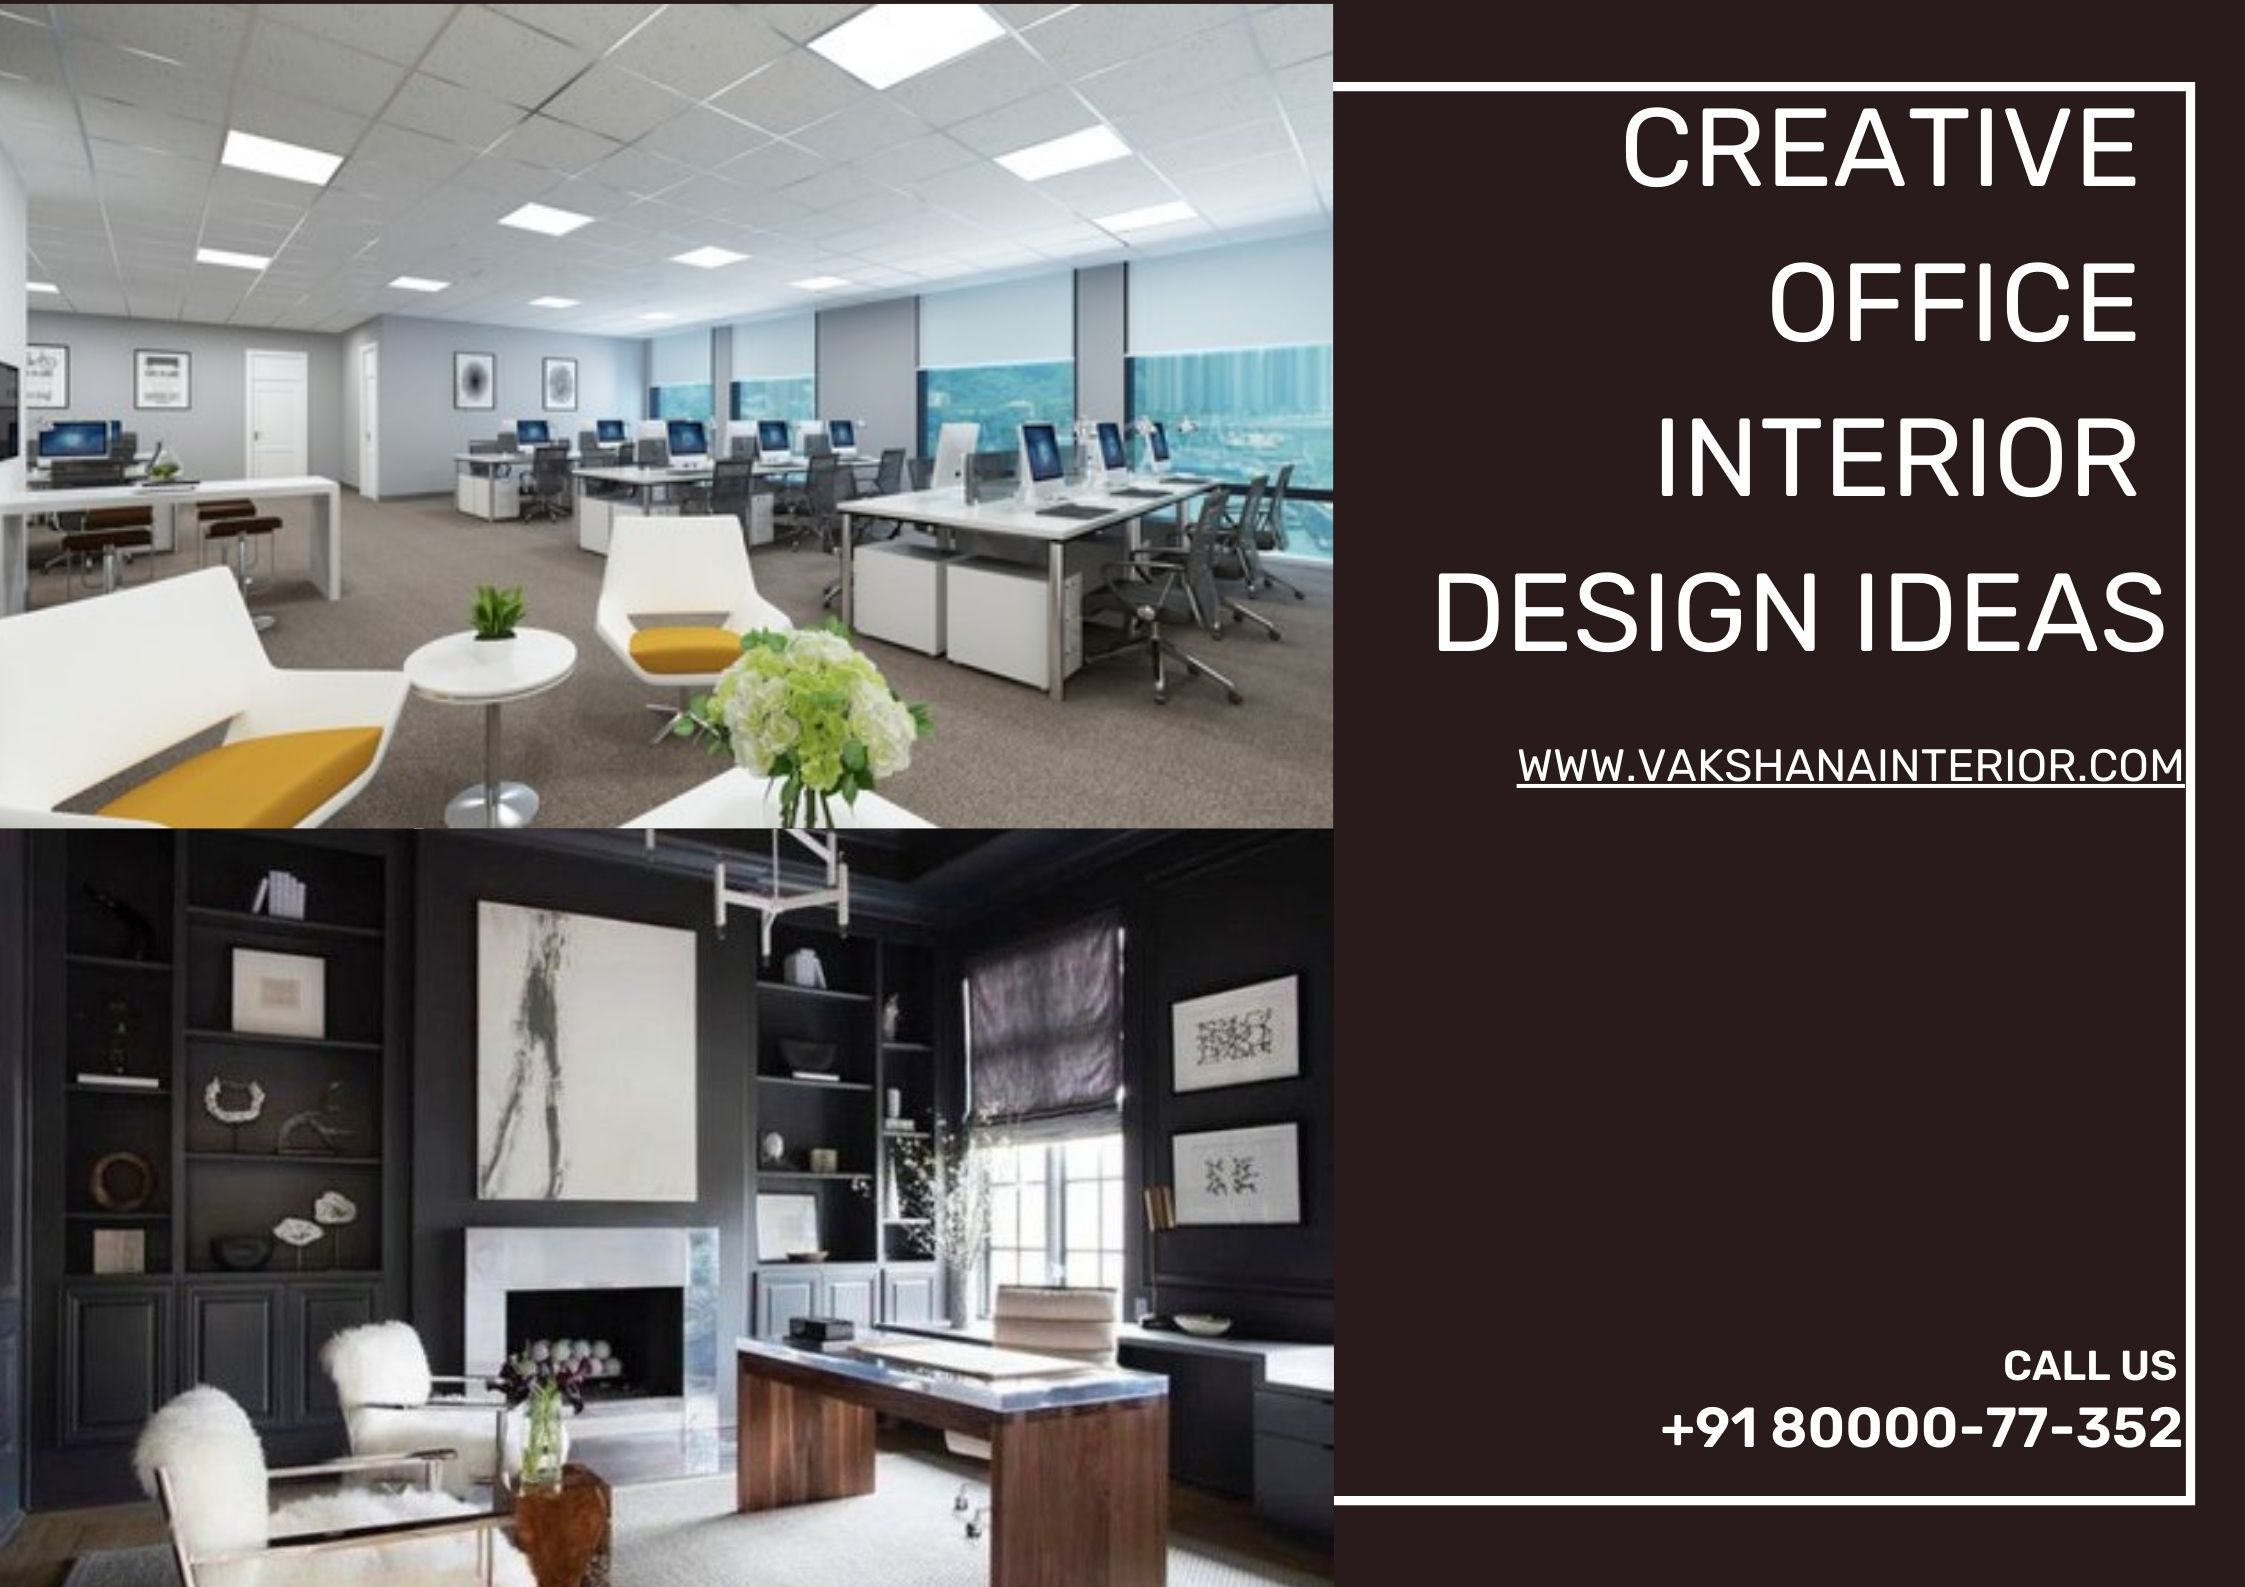 Interior Design ideas for Offices